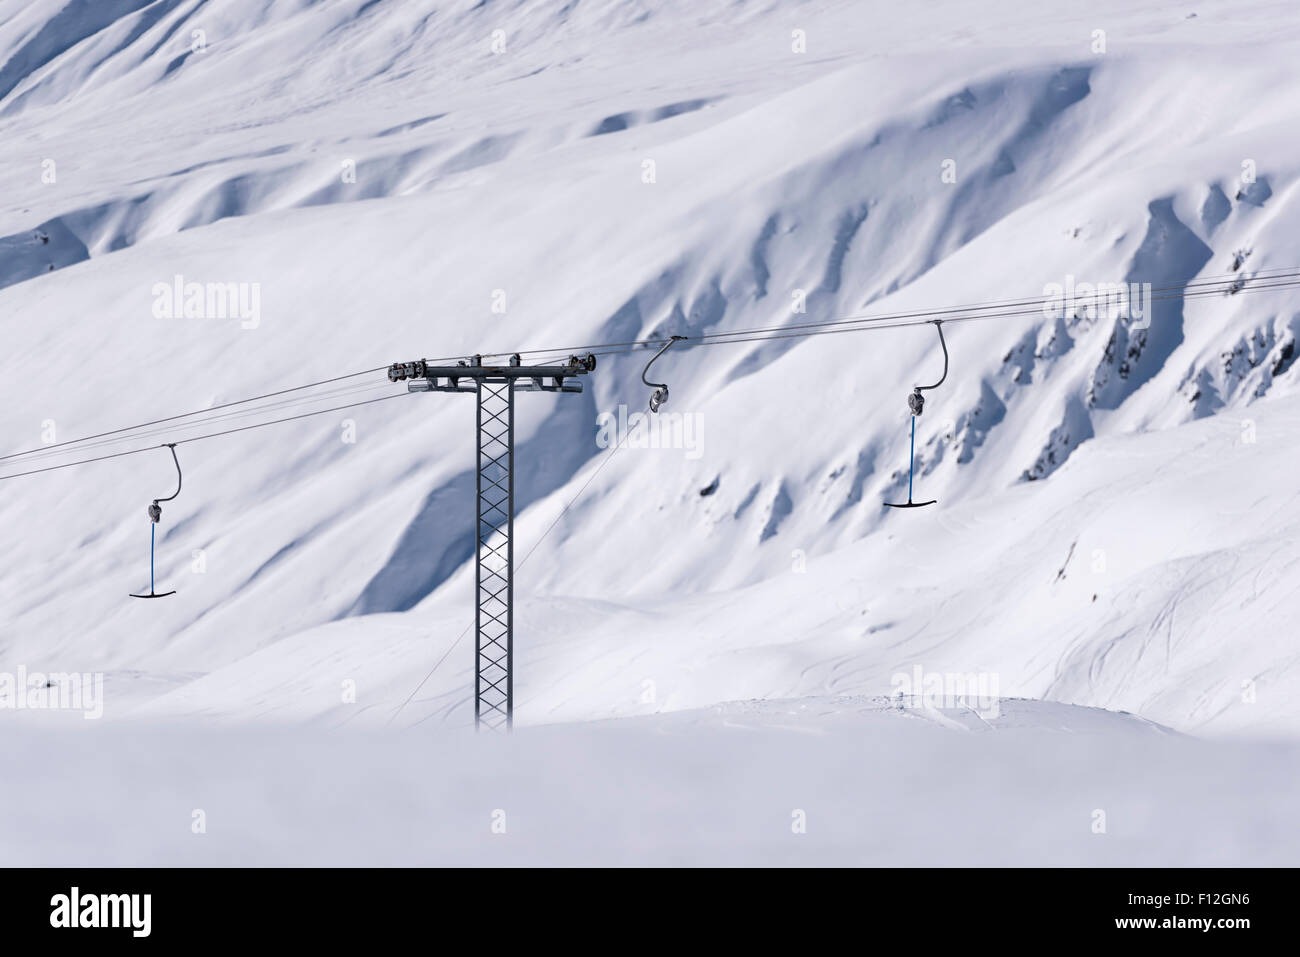 T-bar ski lift at the ski resort Belalp in Switzerland (canton Valais) Stock Photo